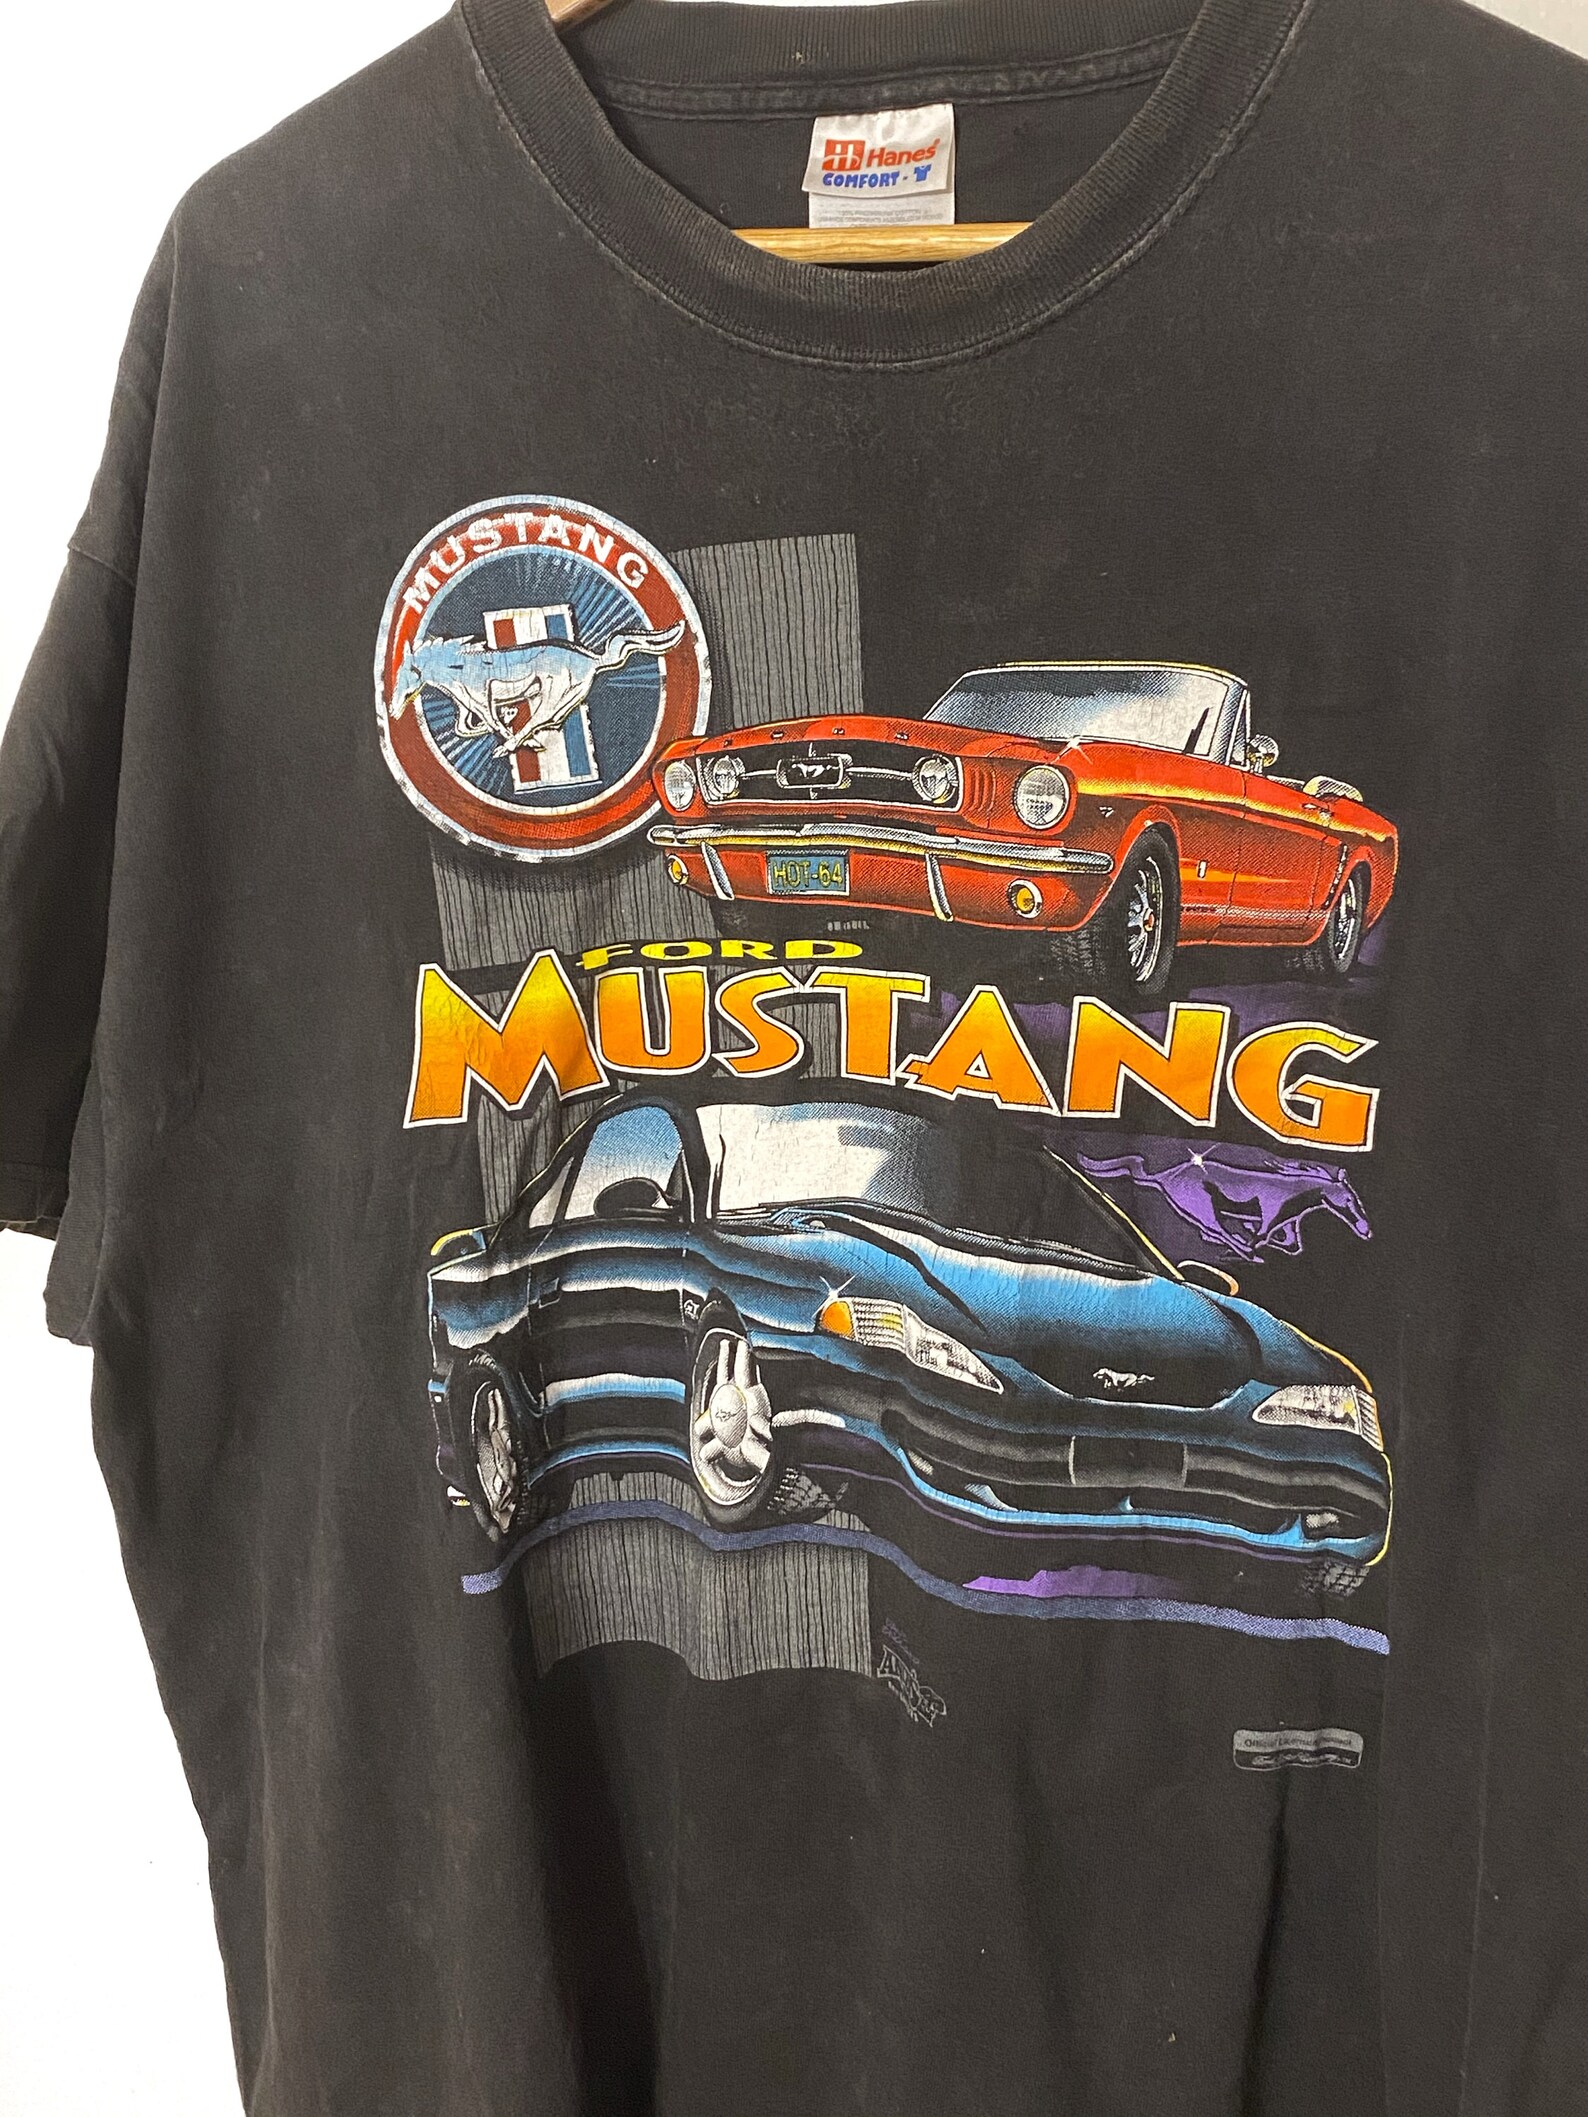 Vintage official Ford mustang merch T-shirt Daytona Florida | Etsy